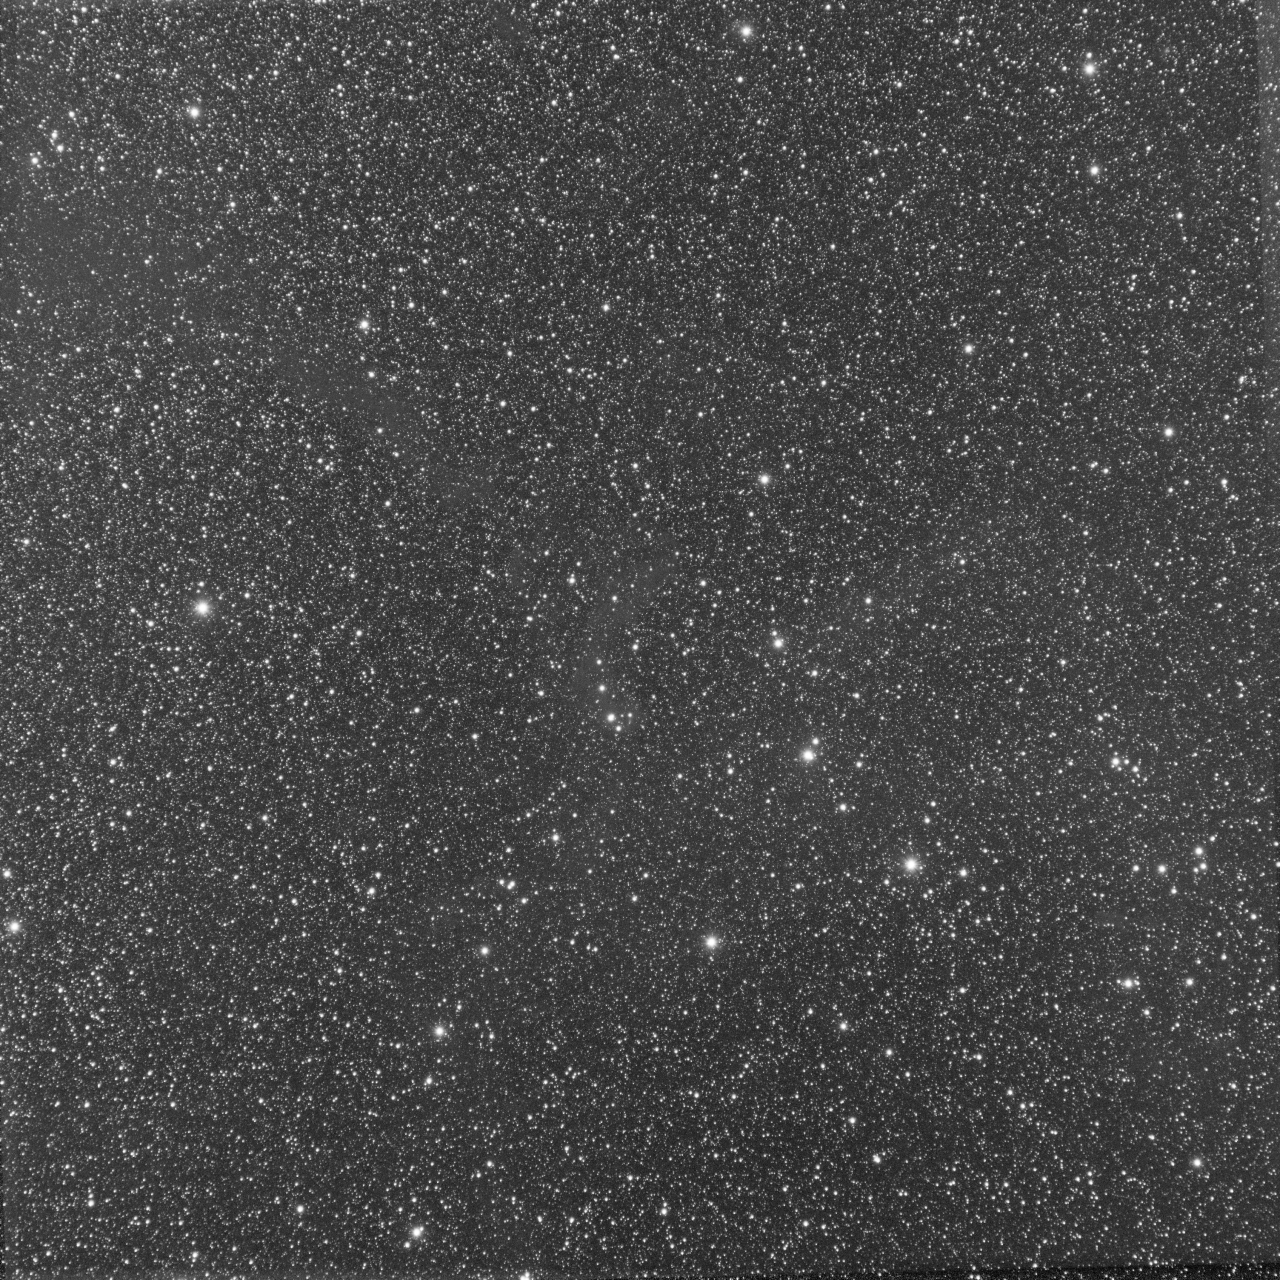 LBN 437 - Gecko Nebula Widefield - B